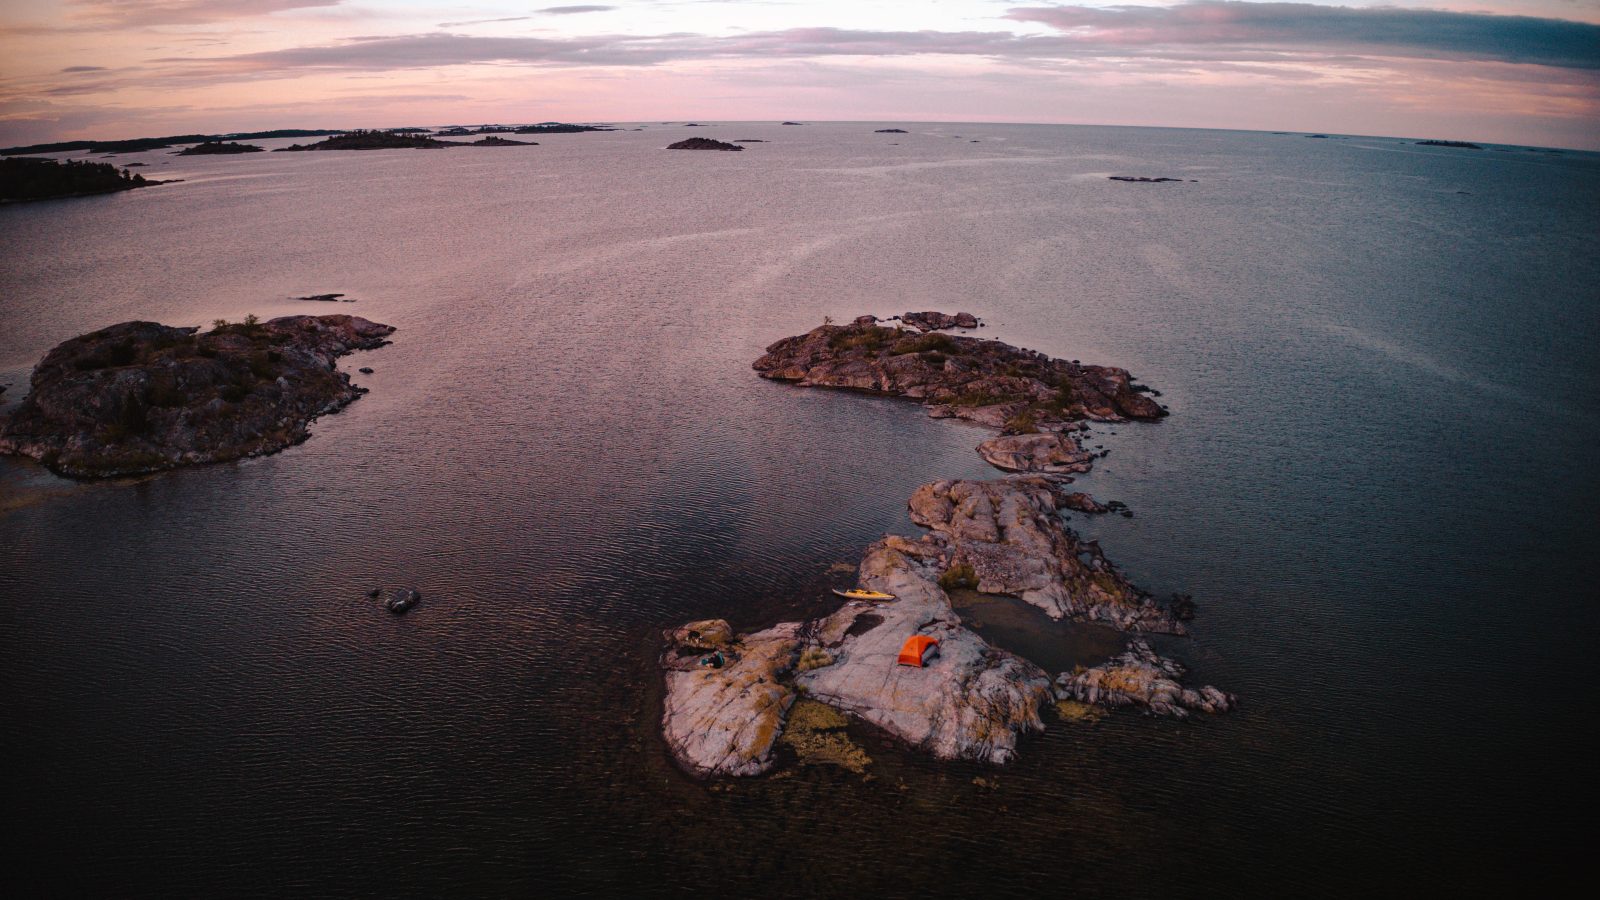 archipelago+island+harstena+sweden+boat+kayak+ocean+tent+camping+drone+dji+sankt+anna+gryt+dog+australian+shepherd